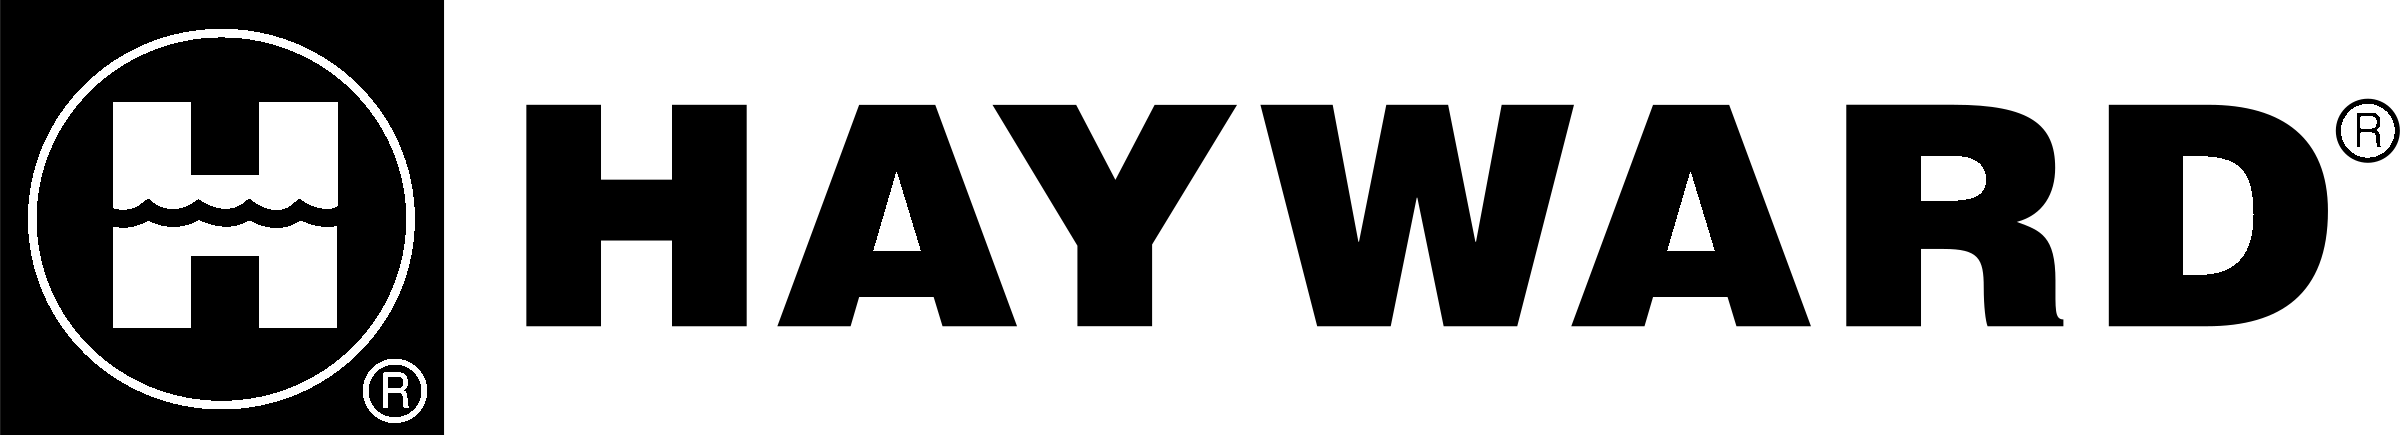 hayward-logo-black-and-white